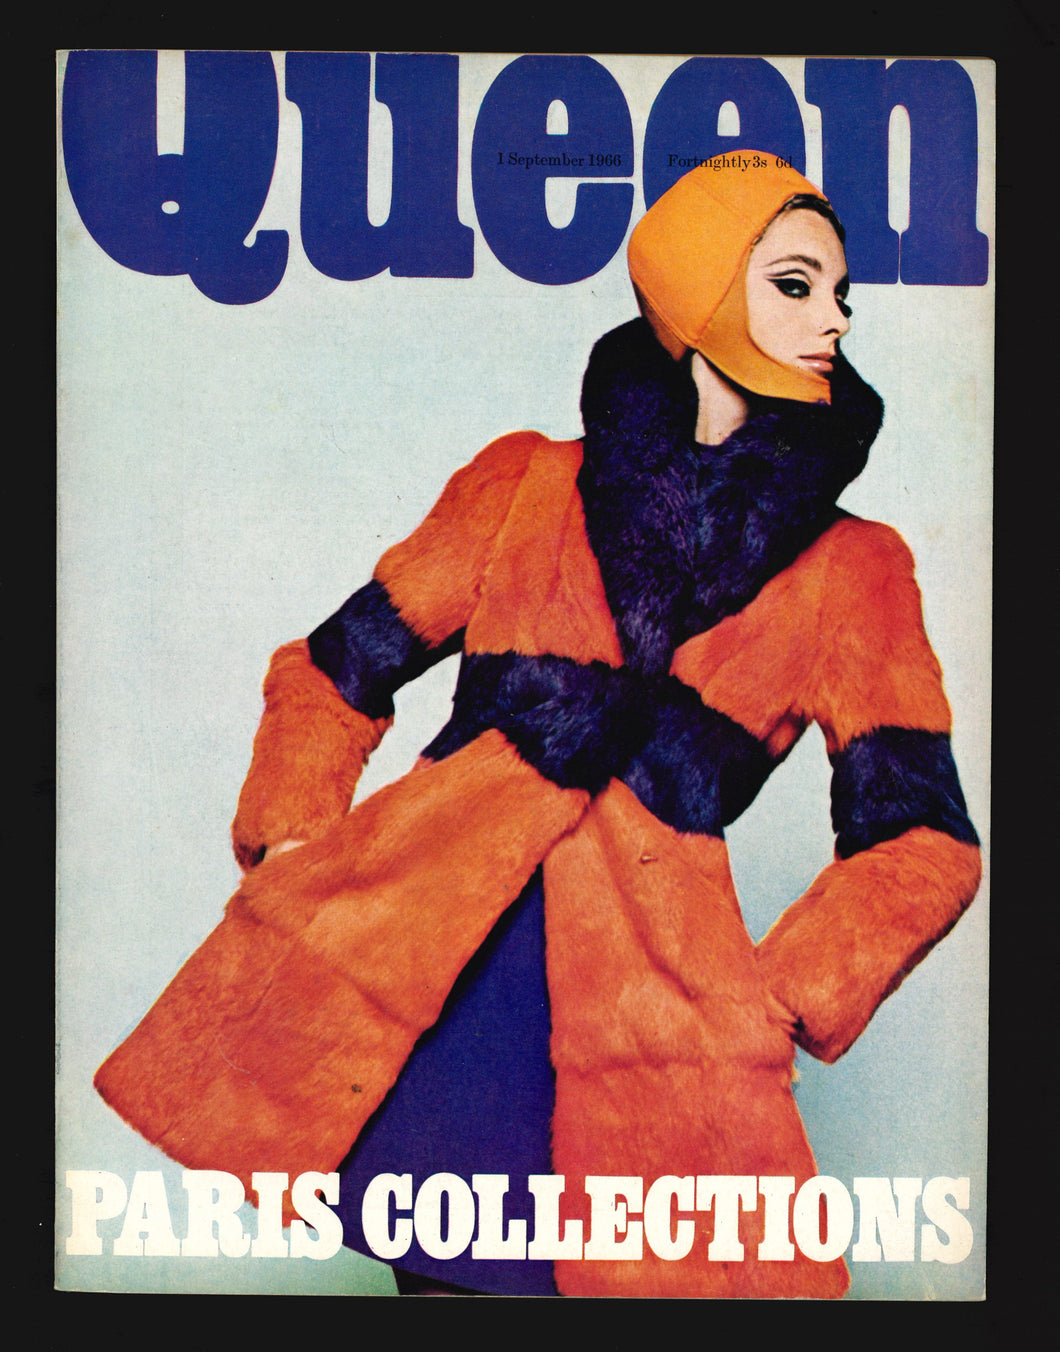 Queen Sept 1 1966 - Paris Collections